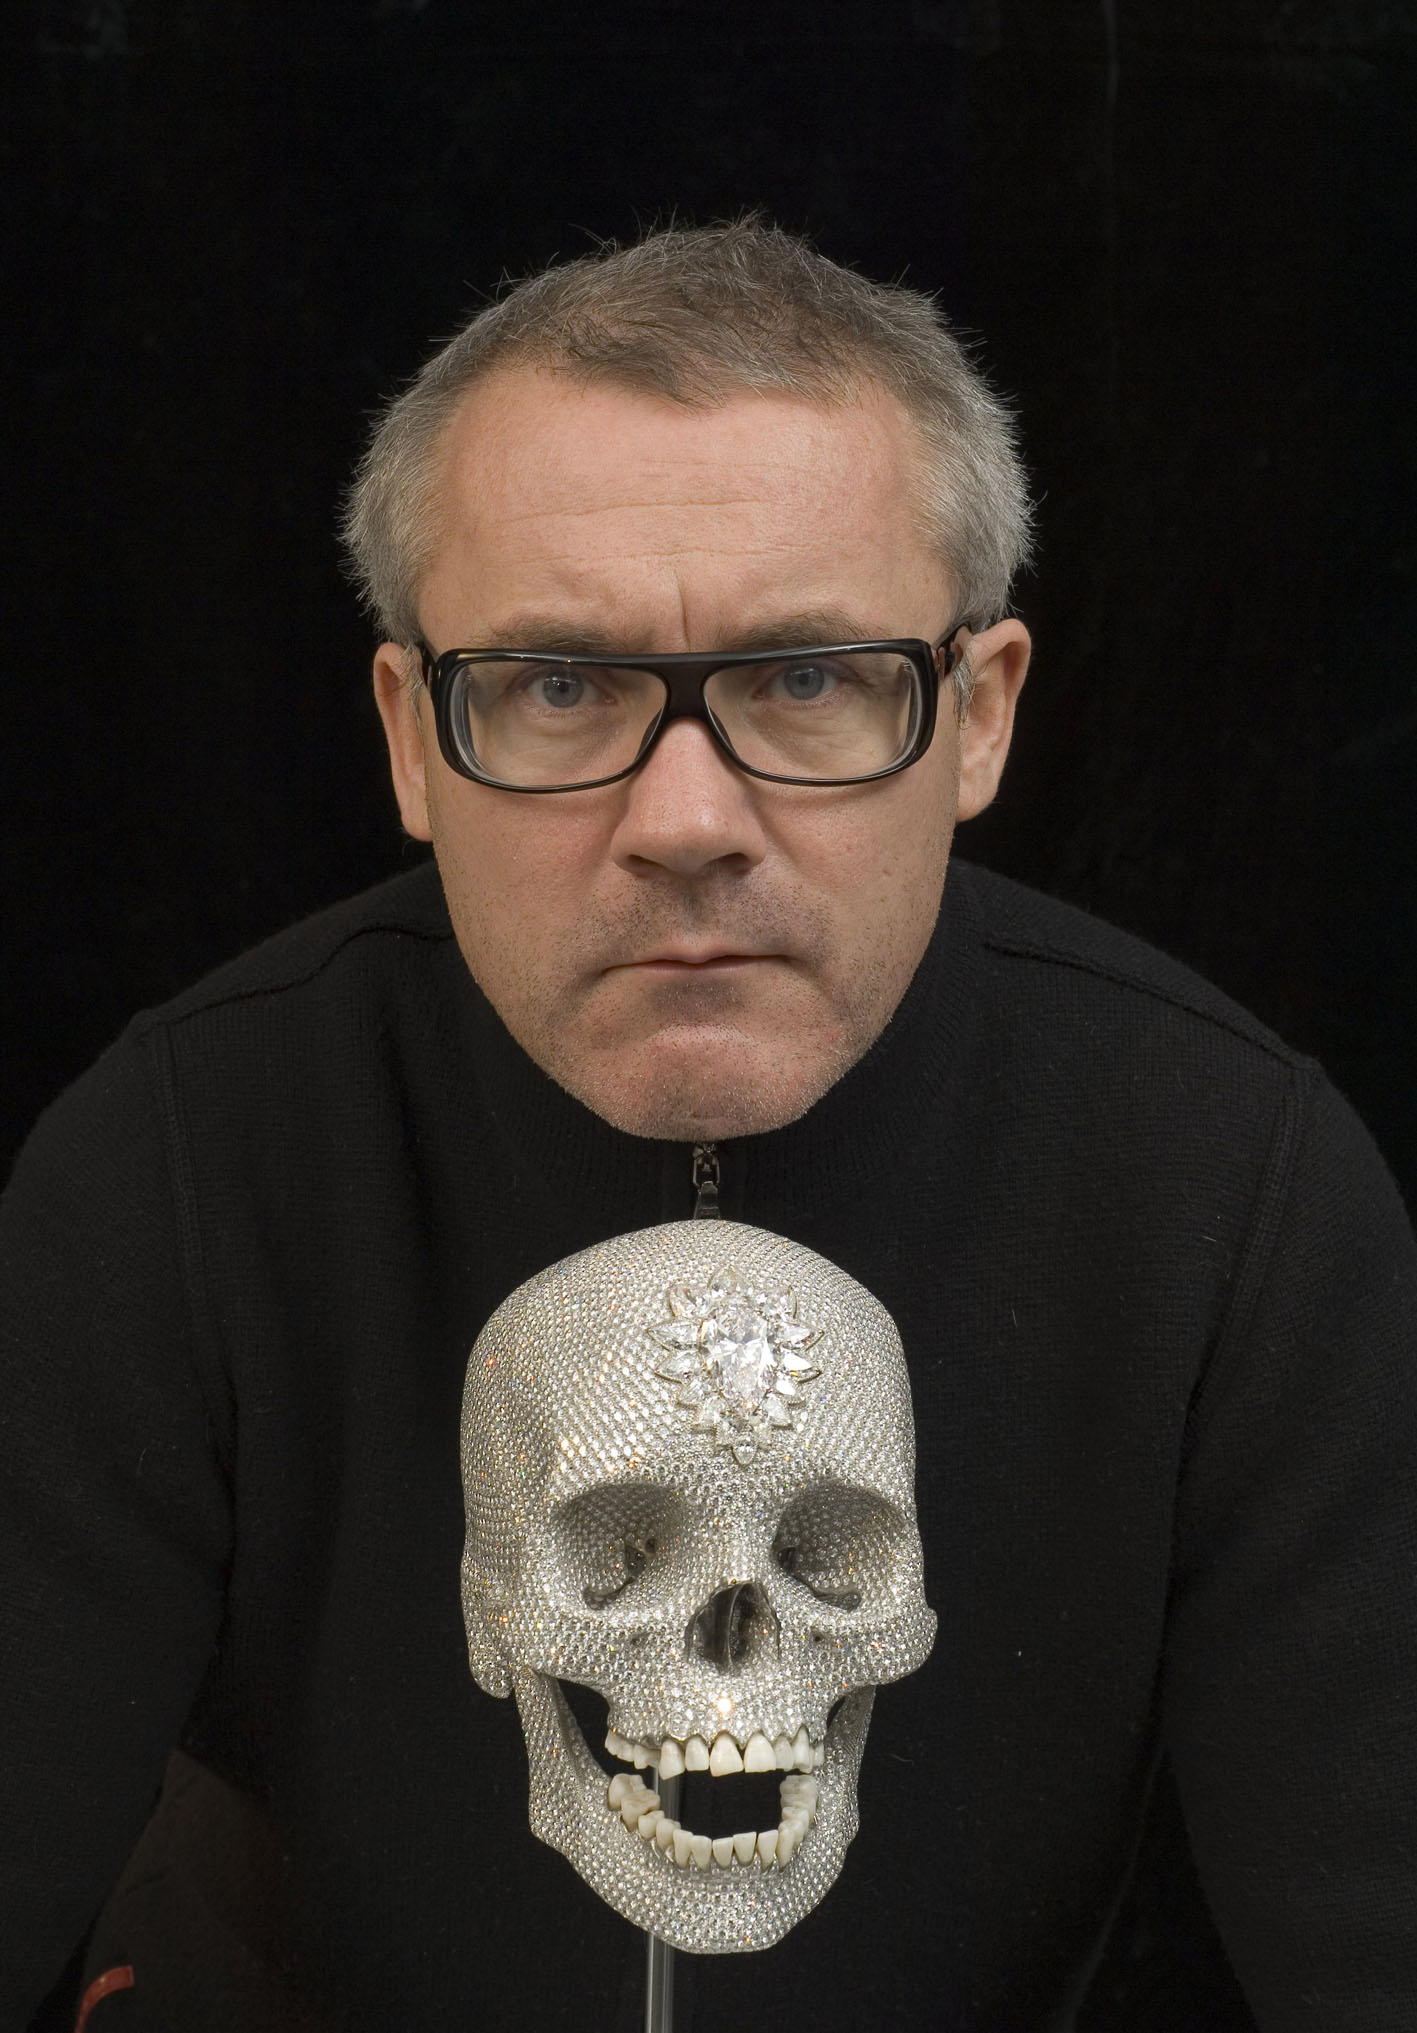 Damien Hirst and platinum skull Image source: https://garethleaney.wordpress.com